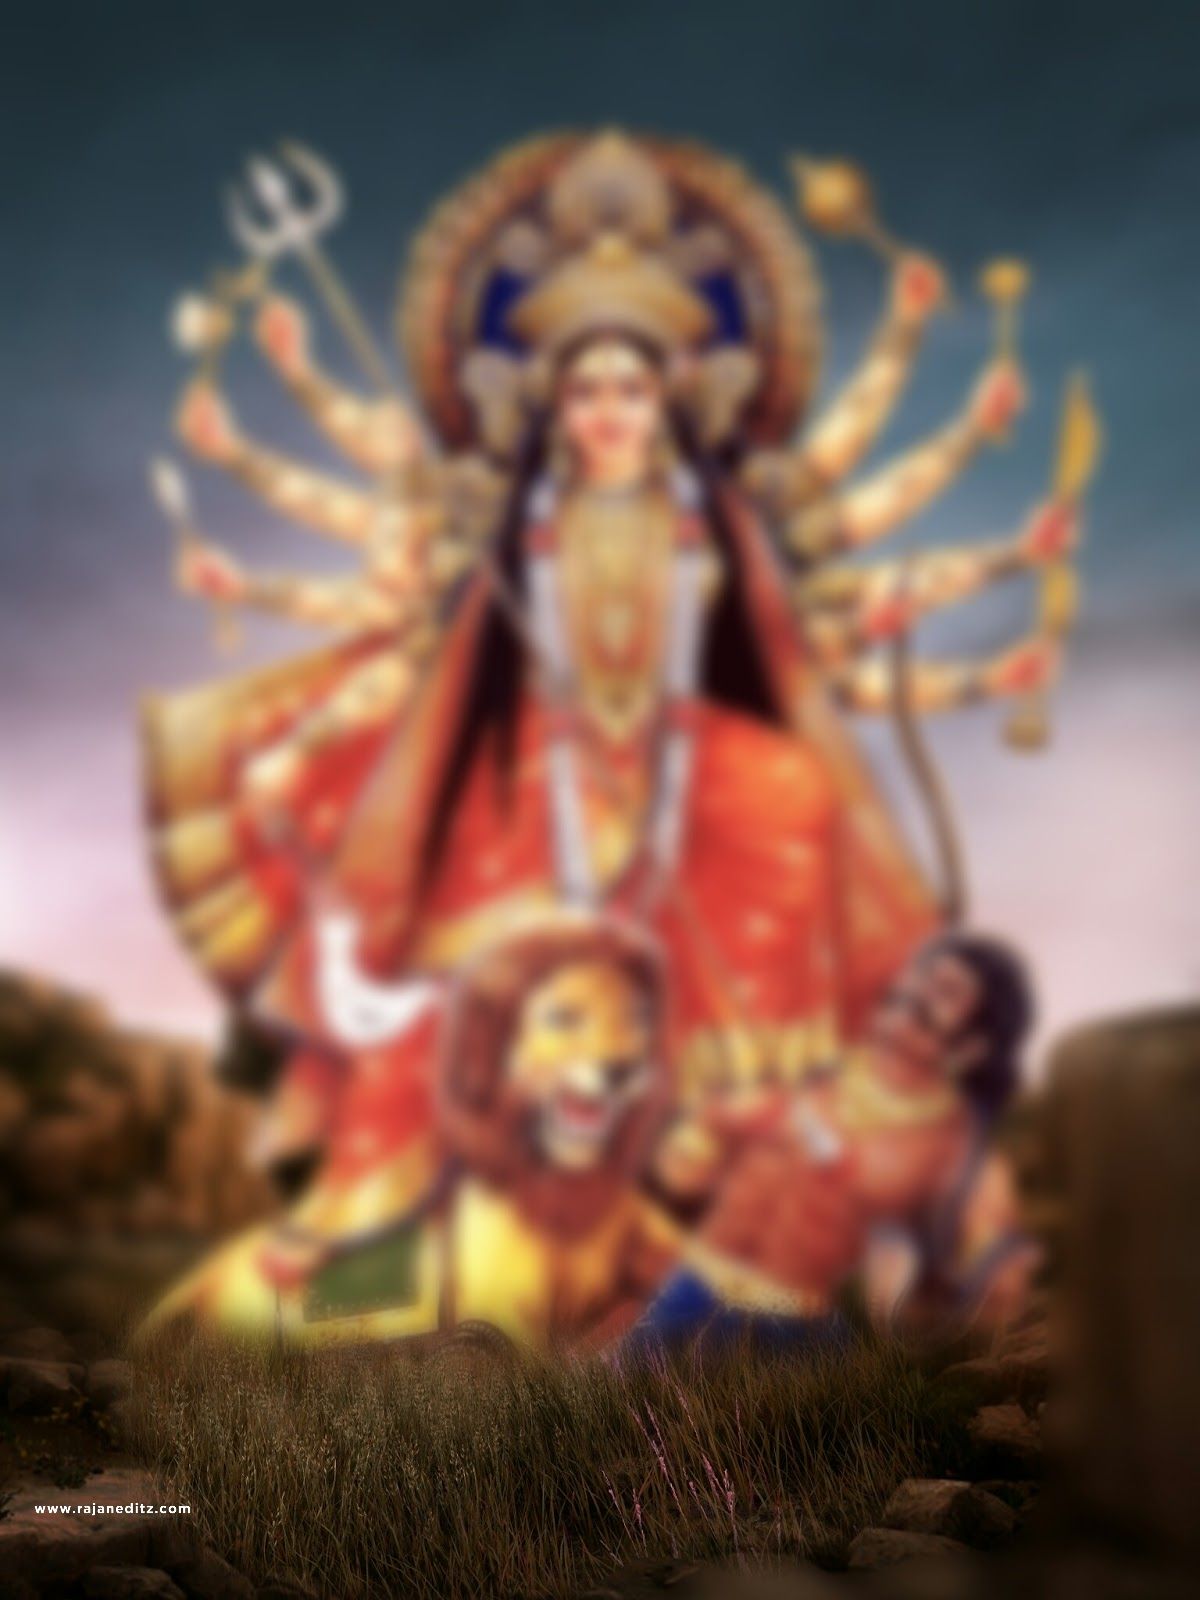 durga mataa editing background download free __Durga Puja editing background